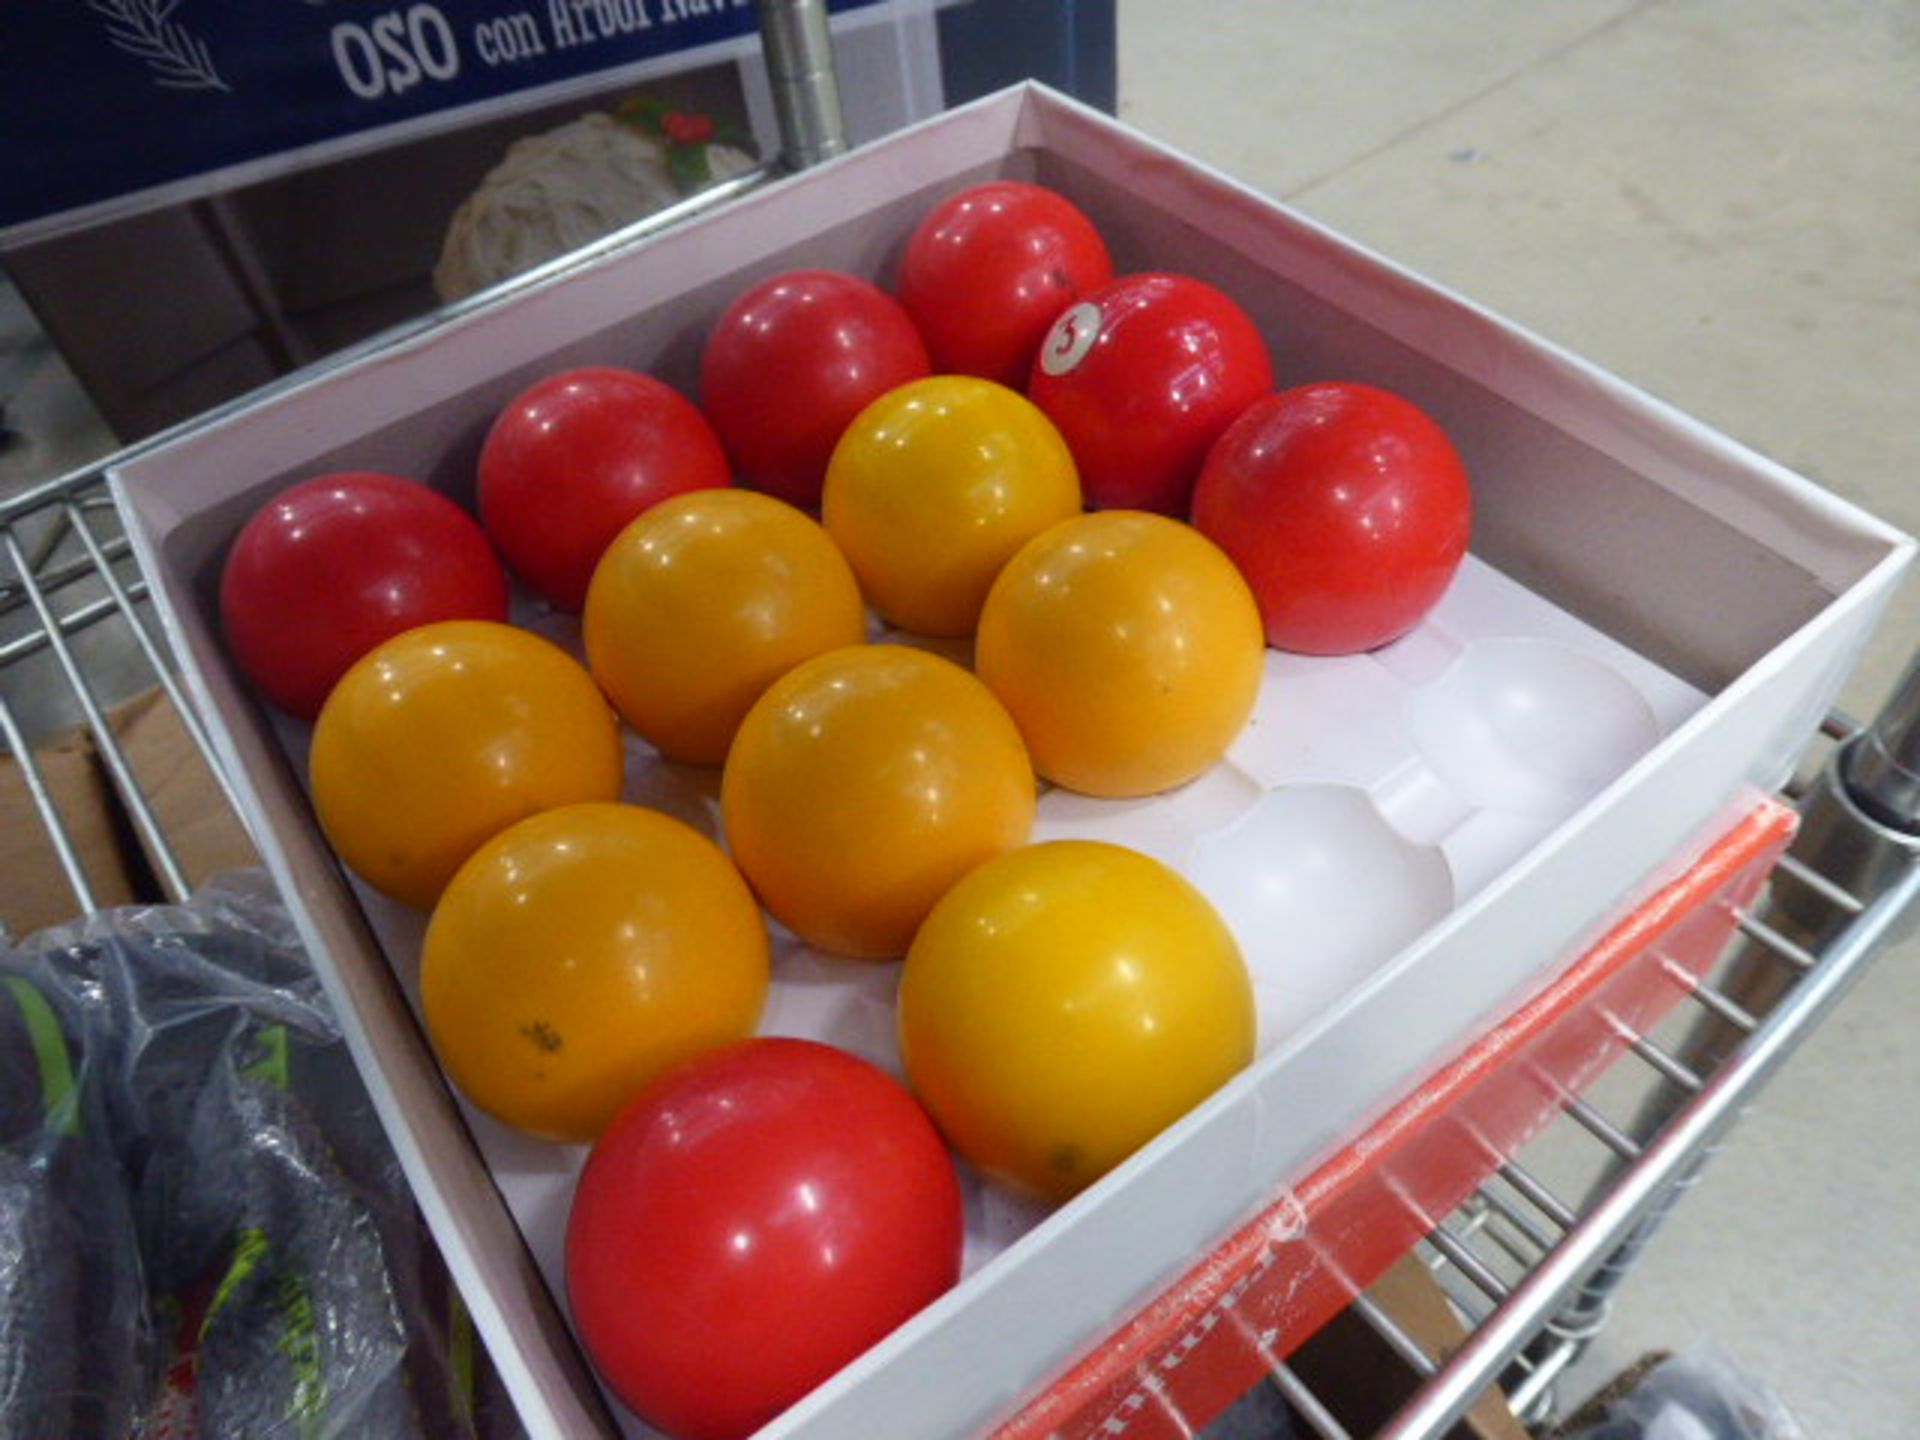 2 boxes containing snooker balls